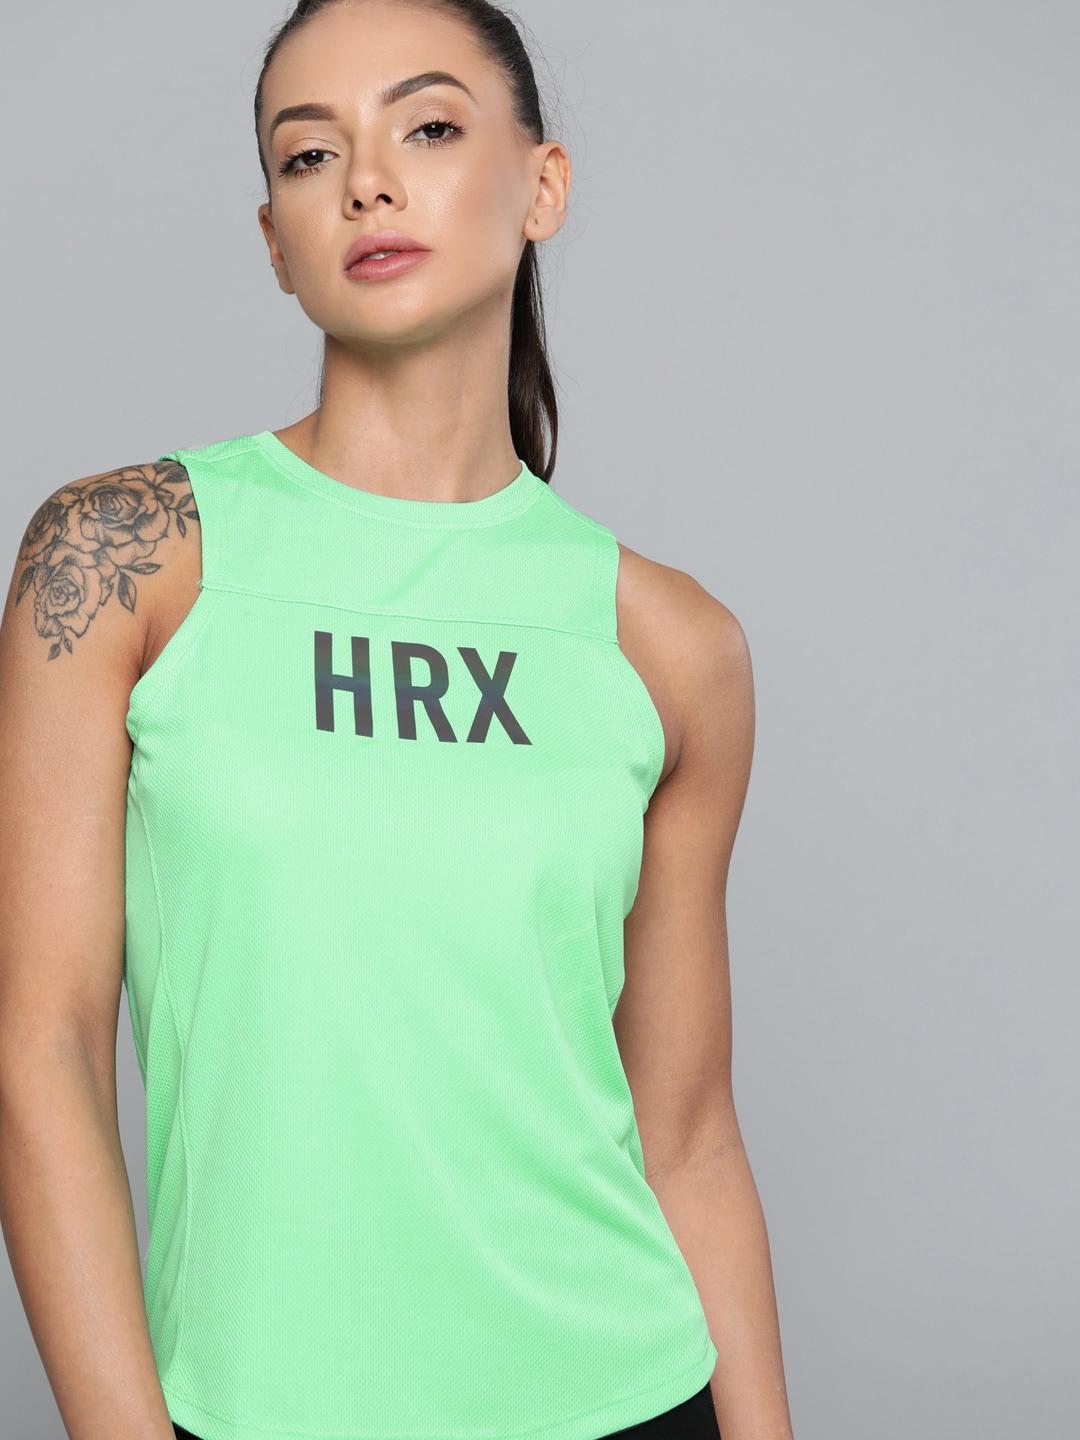 hrx by hrithik roshan running women apple mint rapid-dry brand carrier tshirts